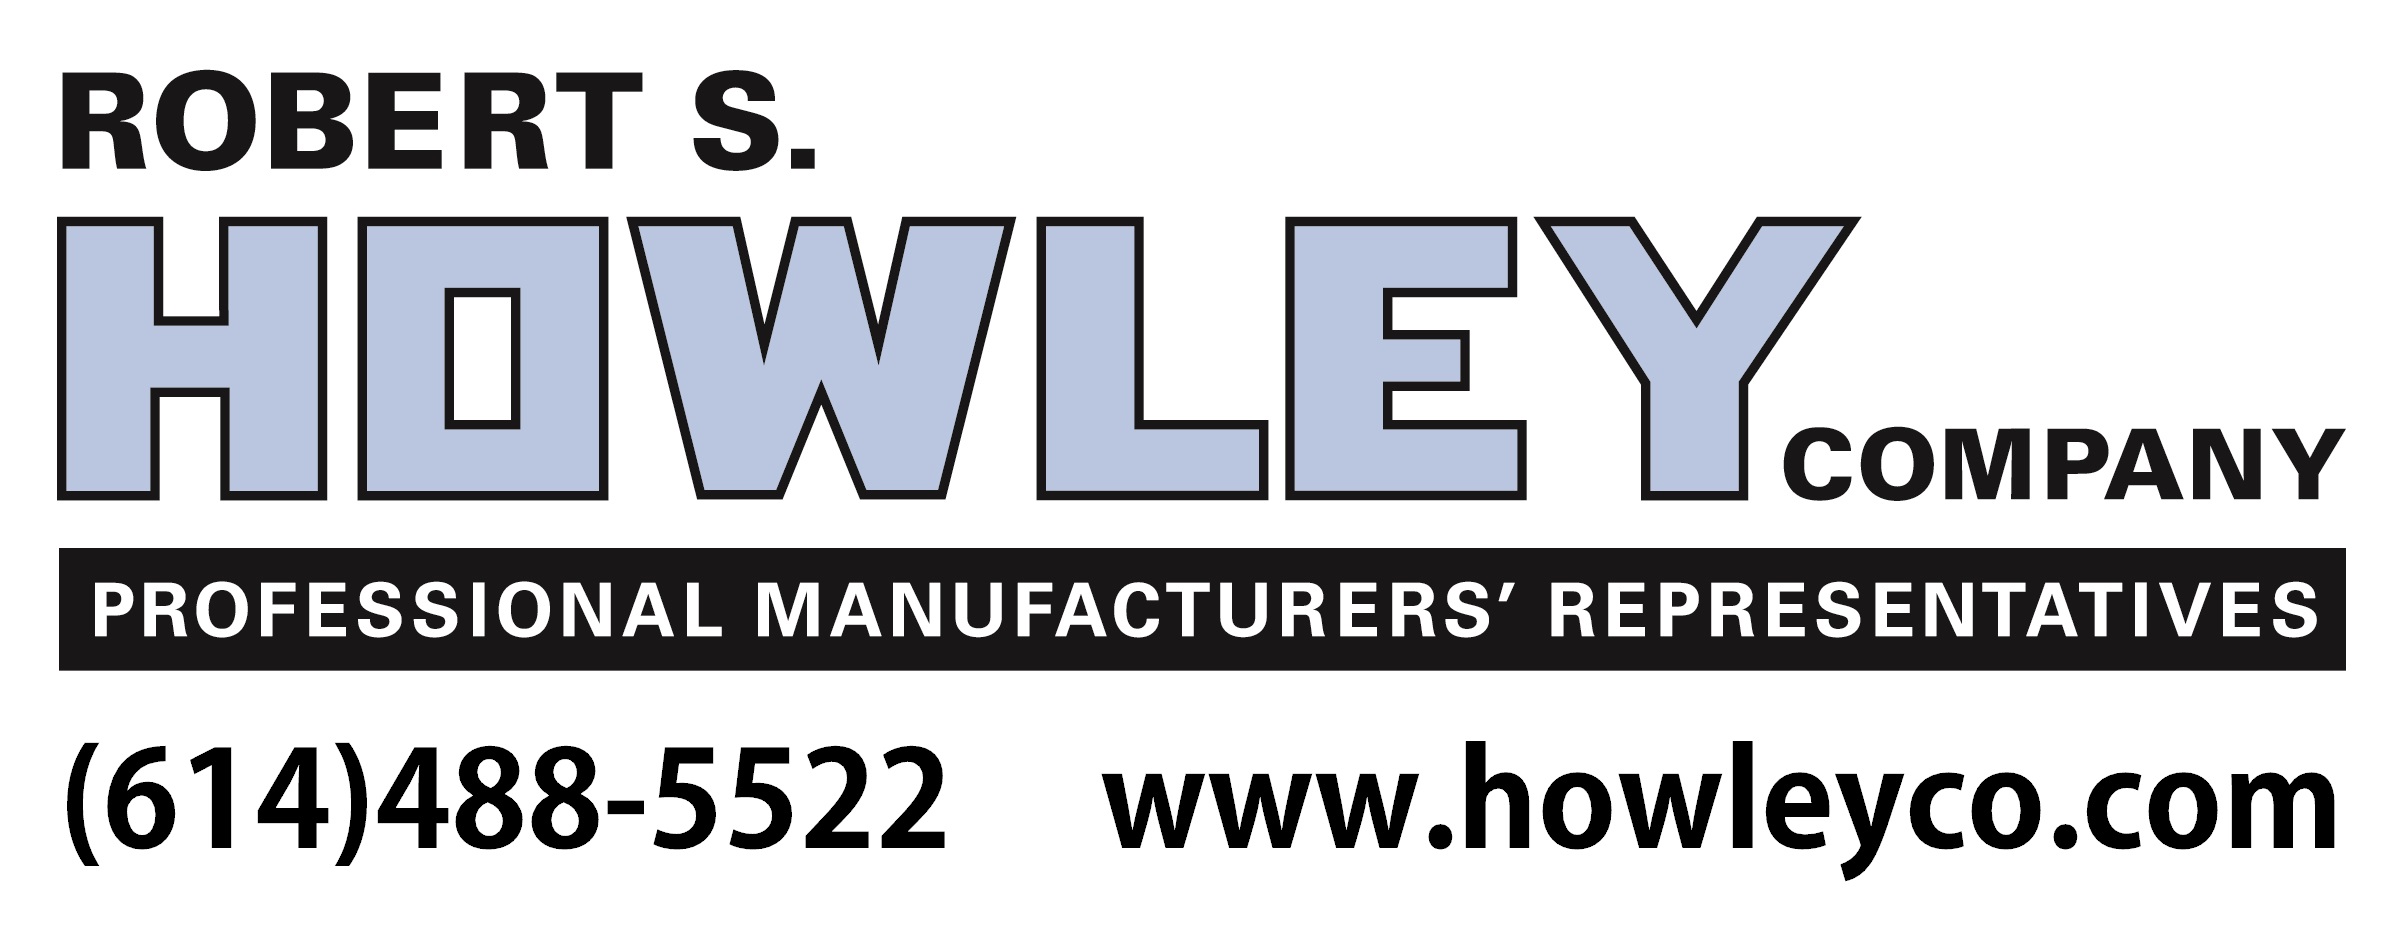 Robert S Howley Company